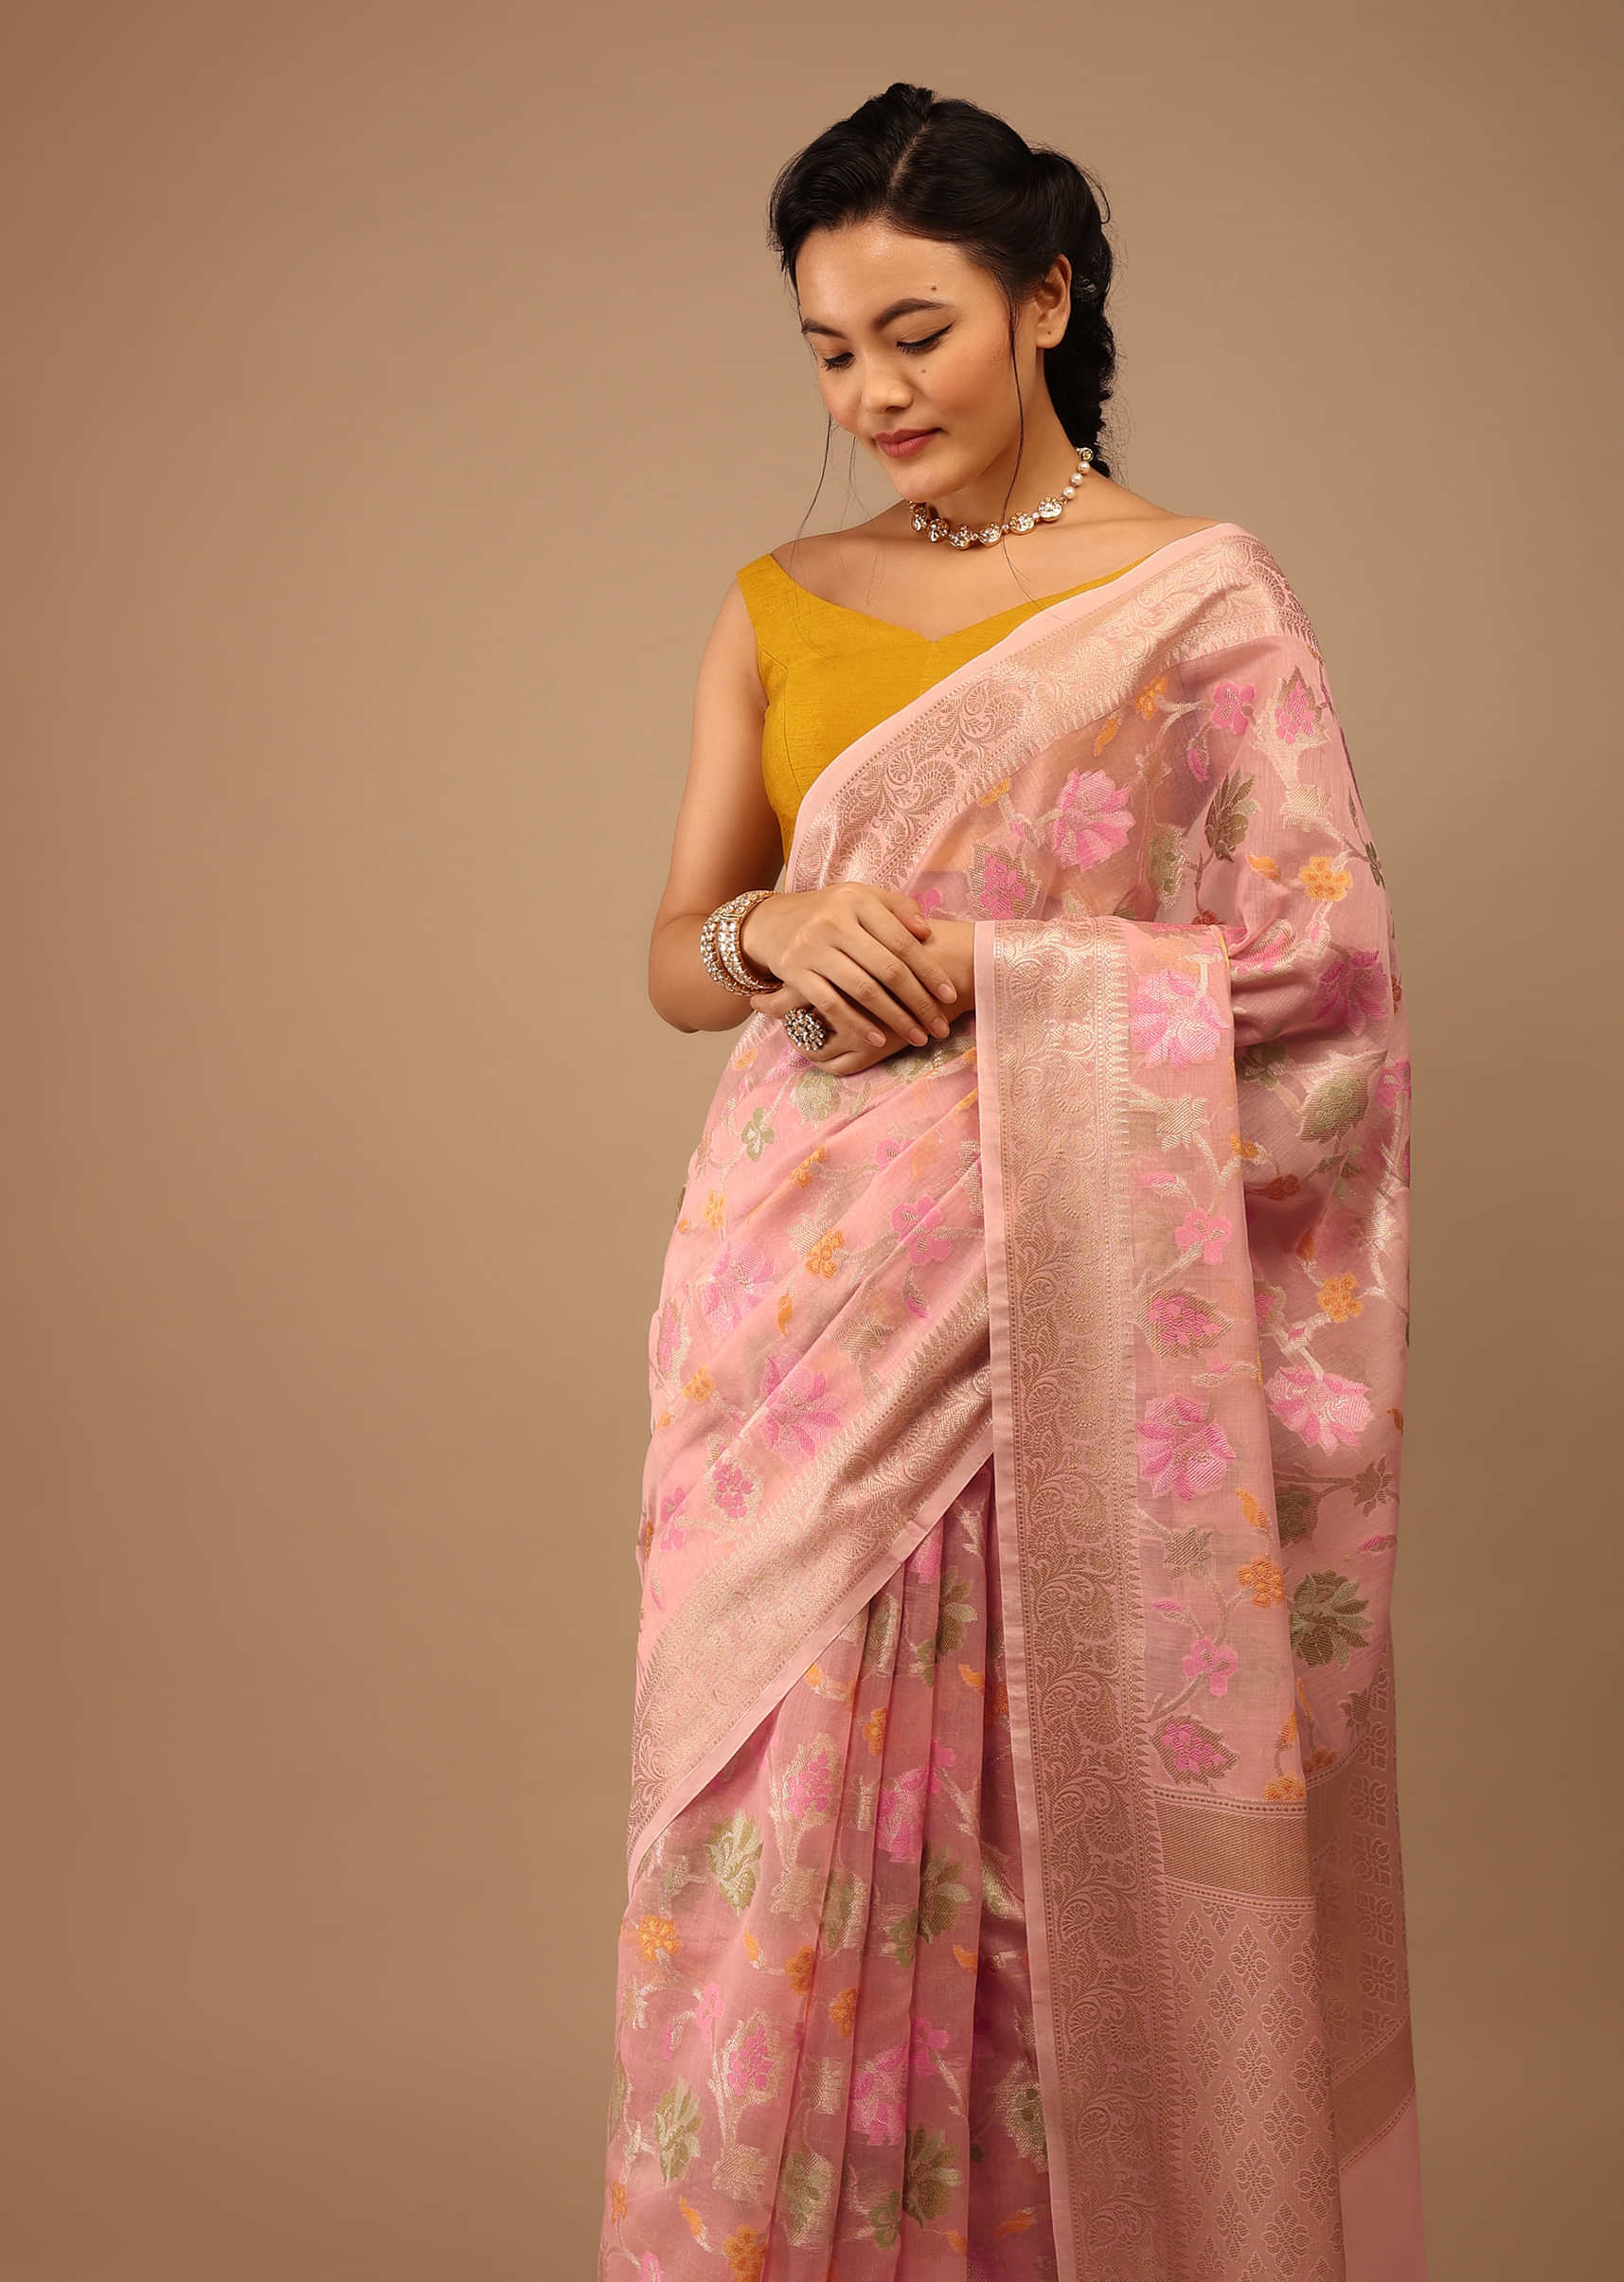 Blush Pink Saree In Banarsi Chanderi And Pure Handloom Cotton